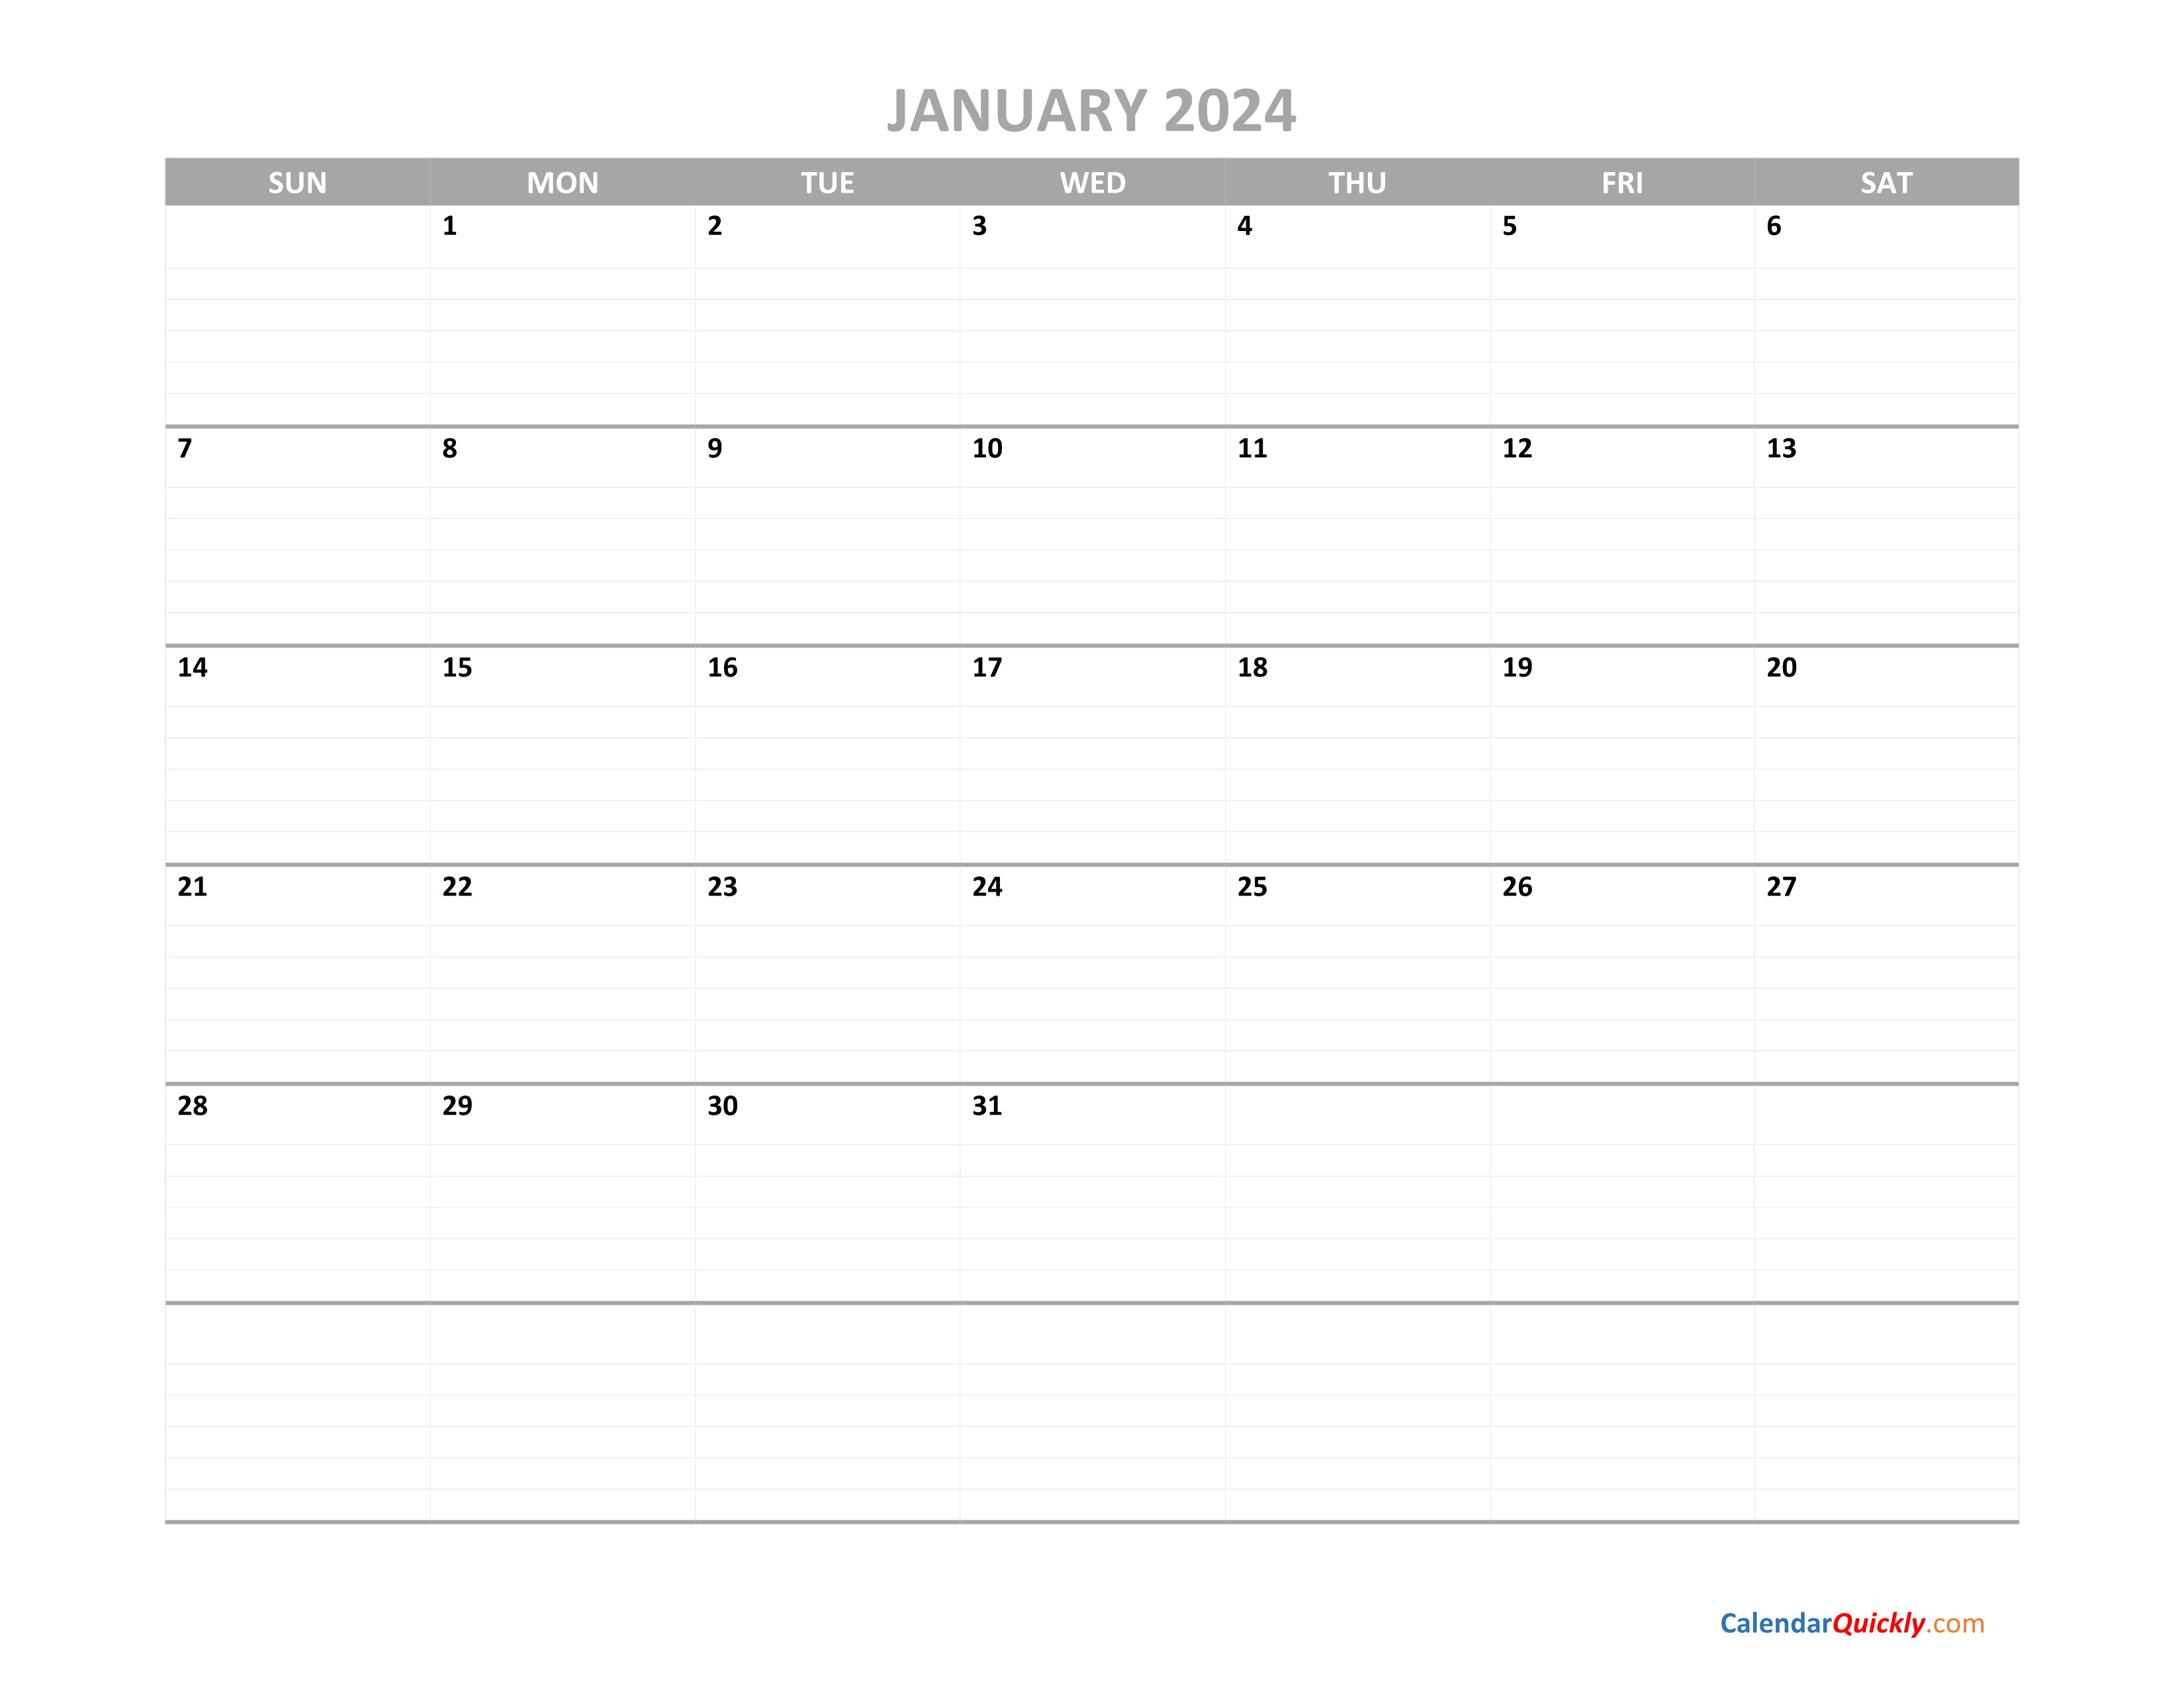 January Calendar 2024 Printable Calendar Quickly